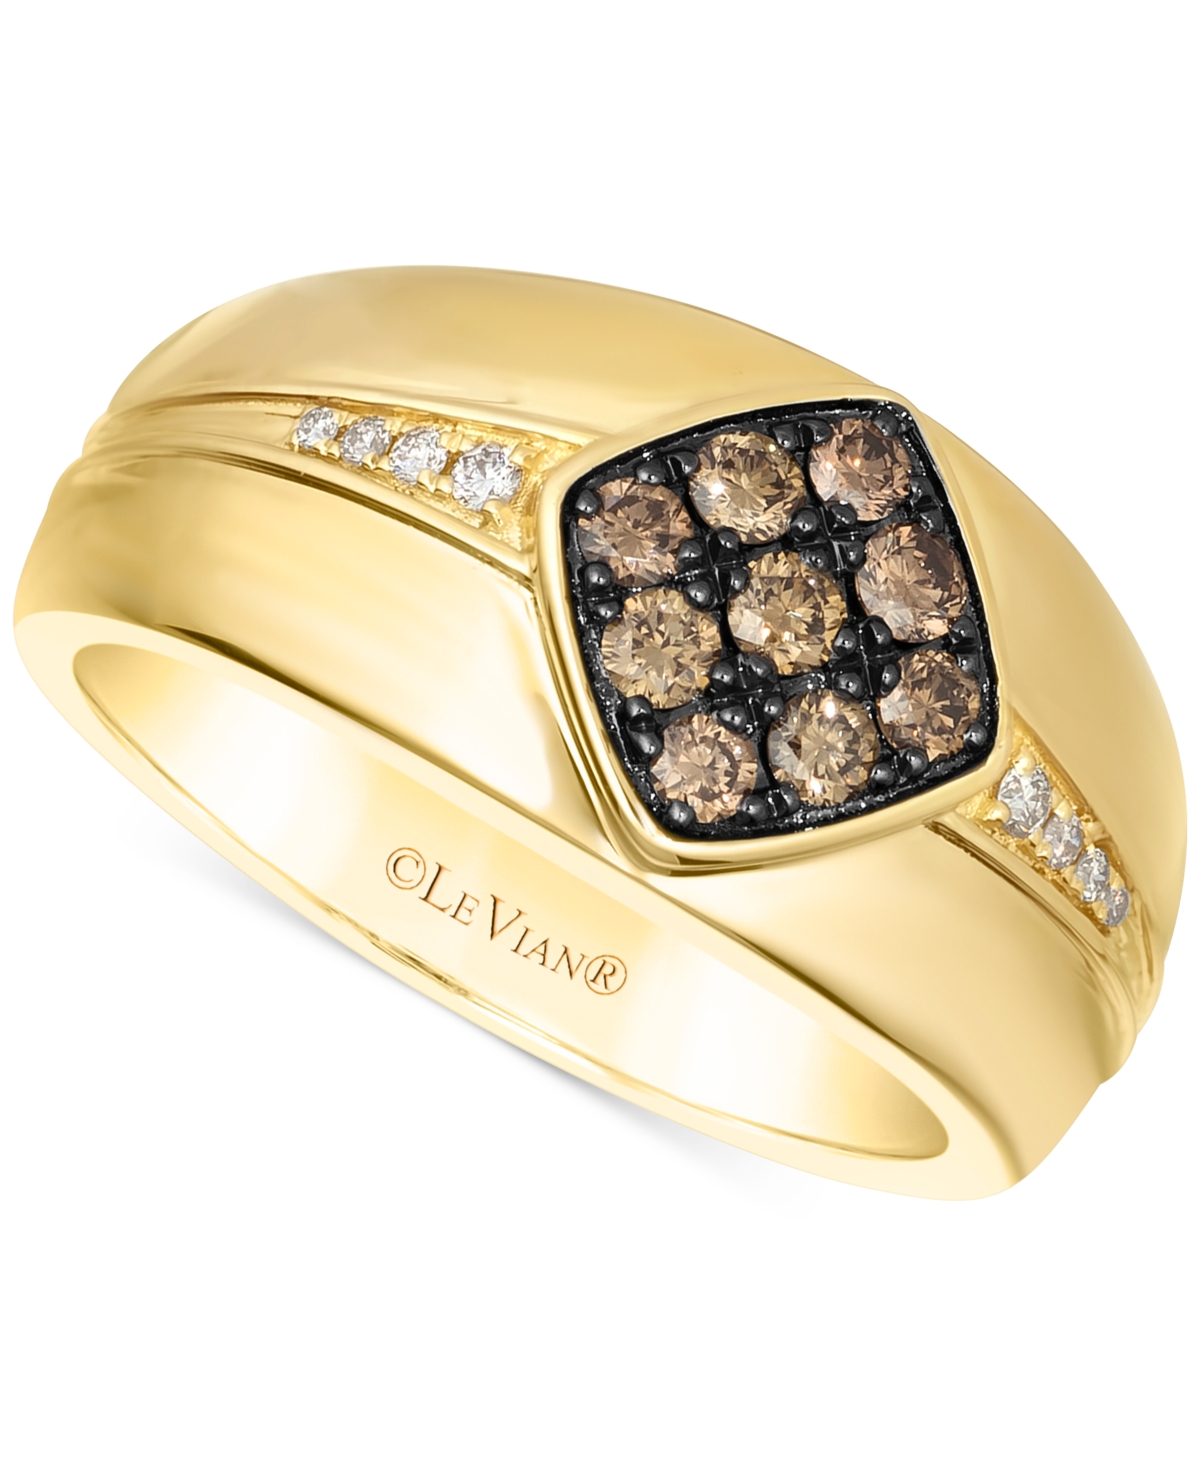 Men's Chocolate Diamond & Nude Diamond Cluster Ring (1/2 ct. t.w.) in 14k Gold - K Honey Gold Ring